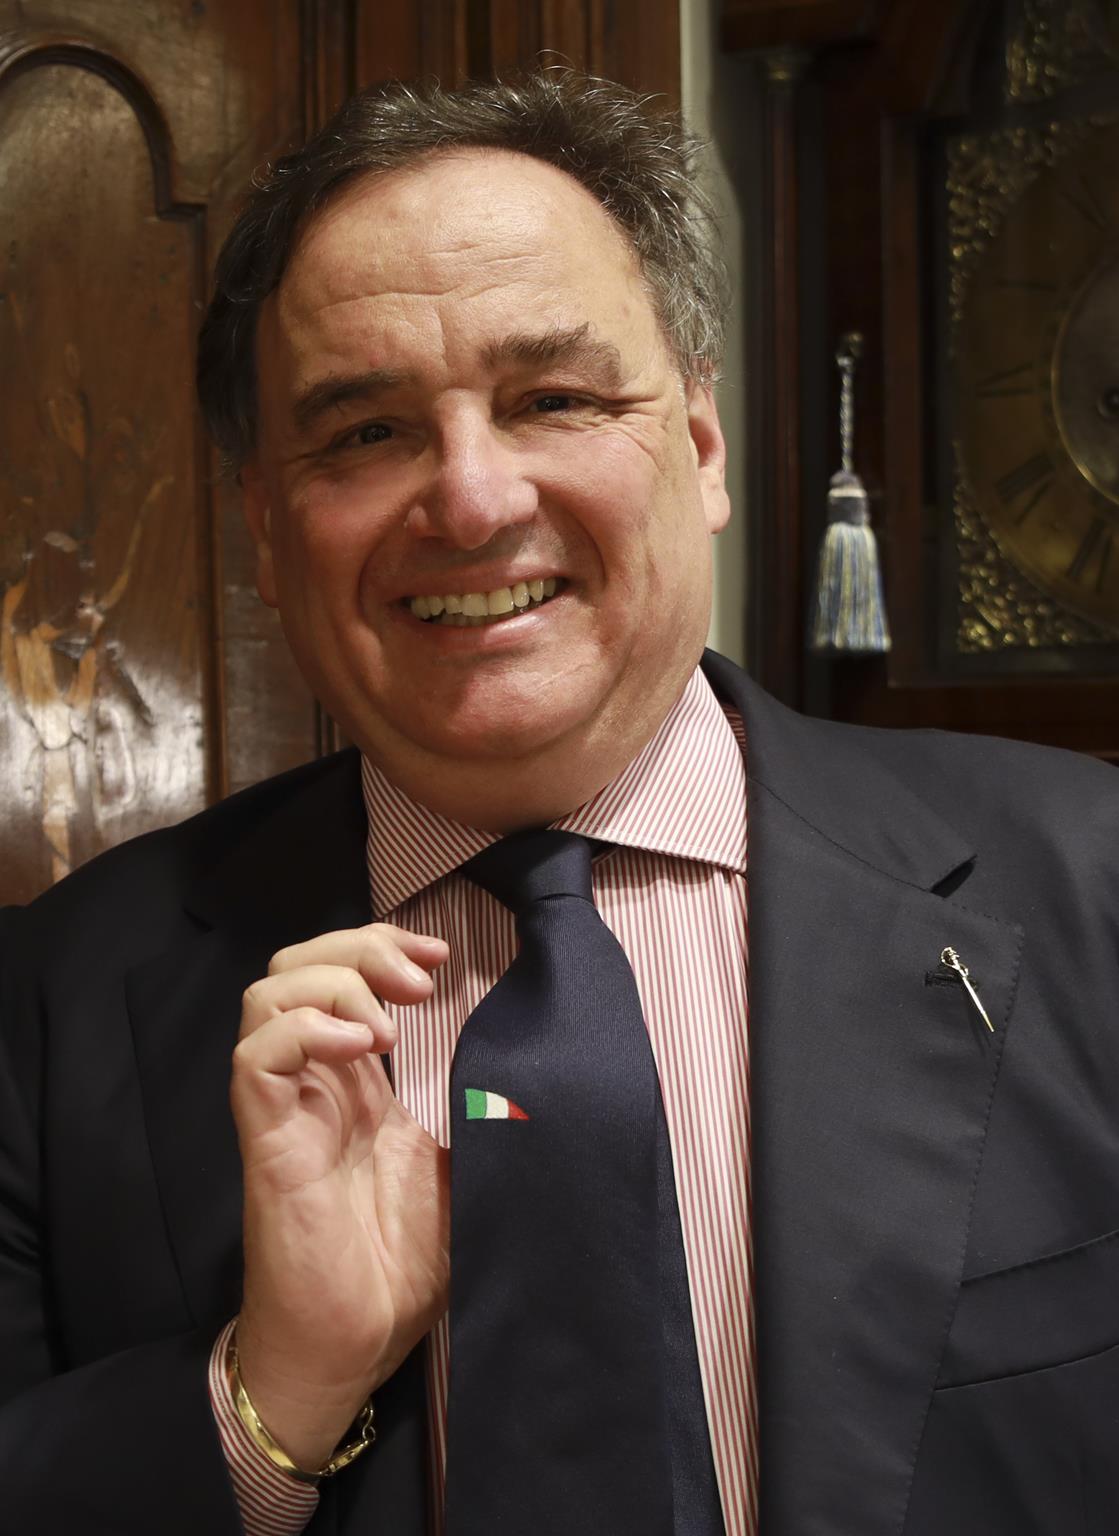 Ugo Cilento, proprietario dello storico marchio